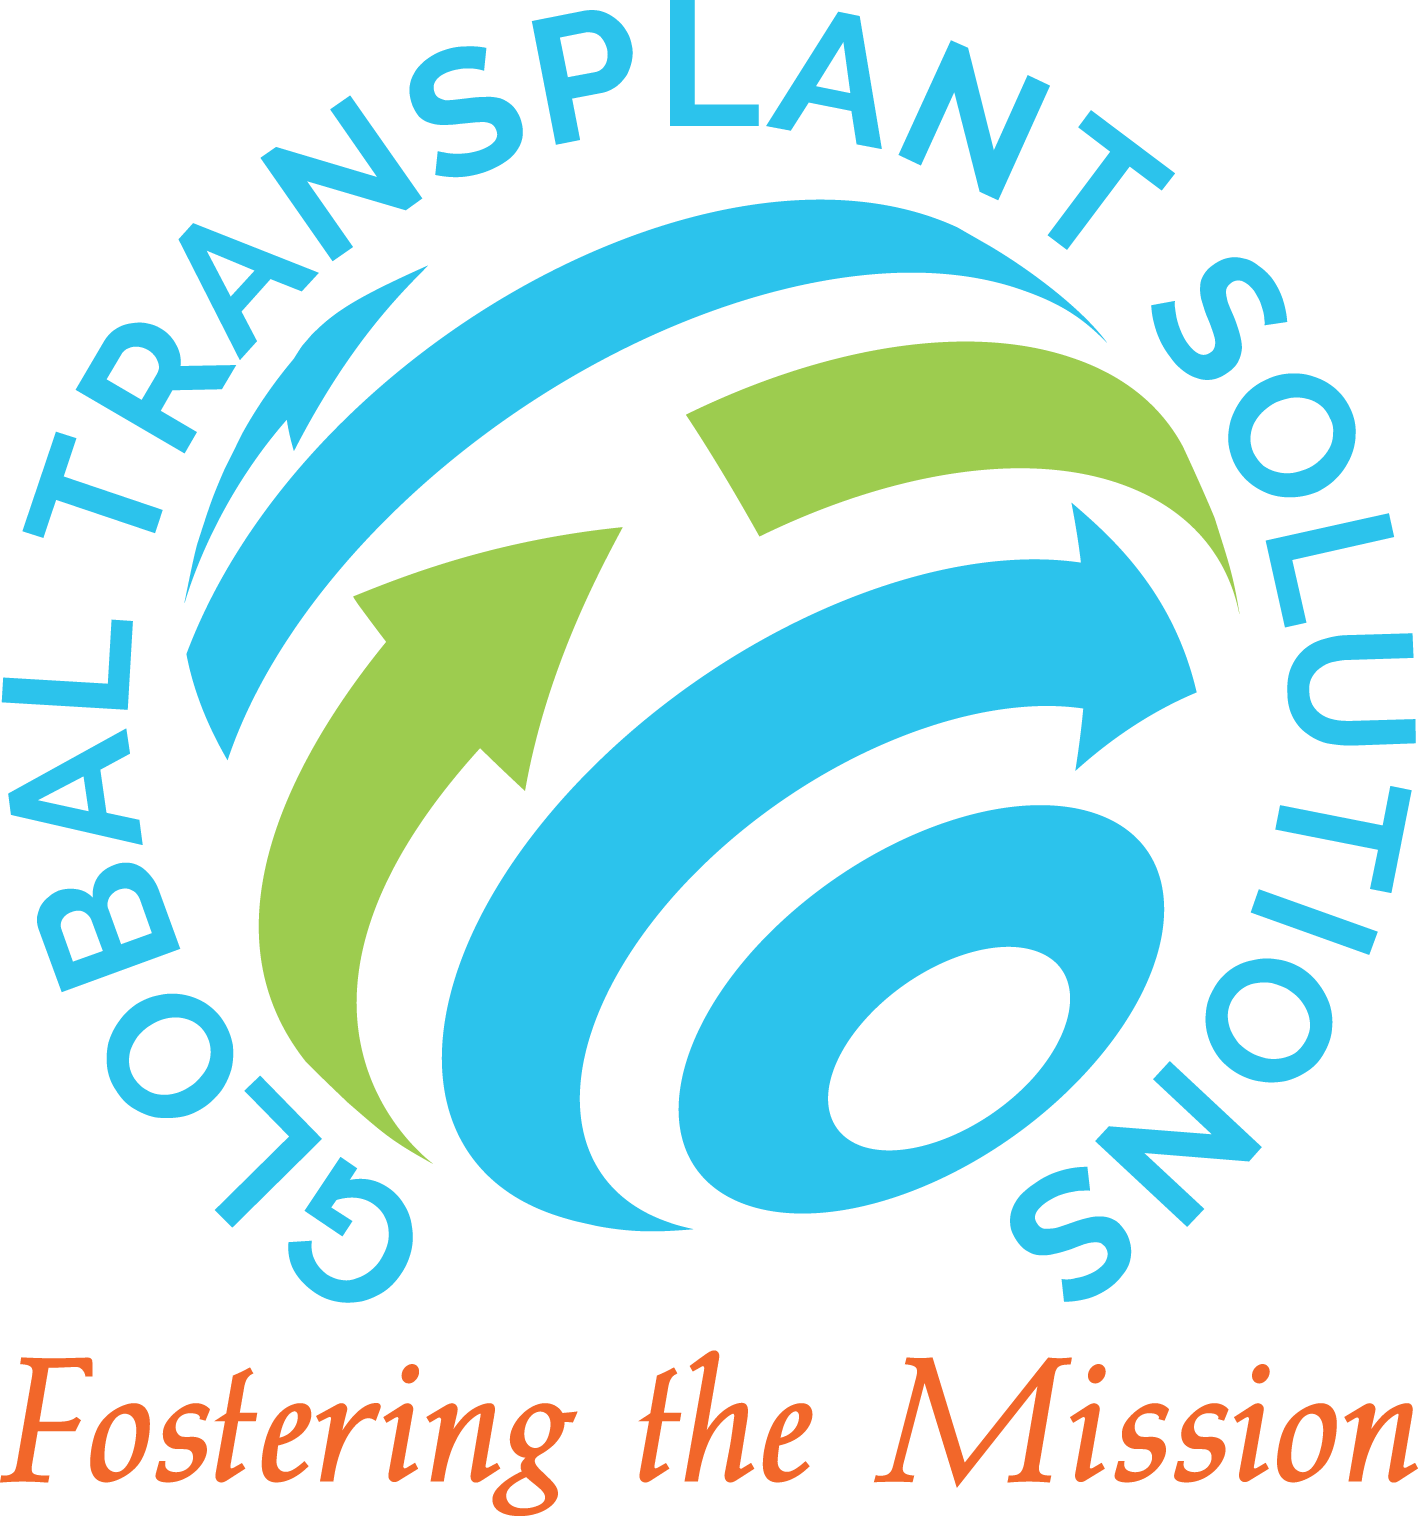 Global Transplant Solutions